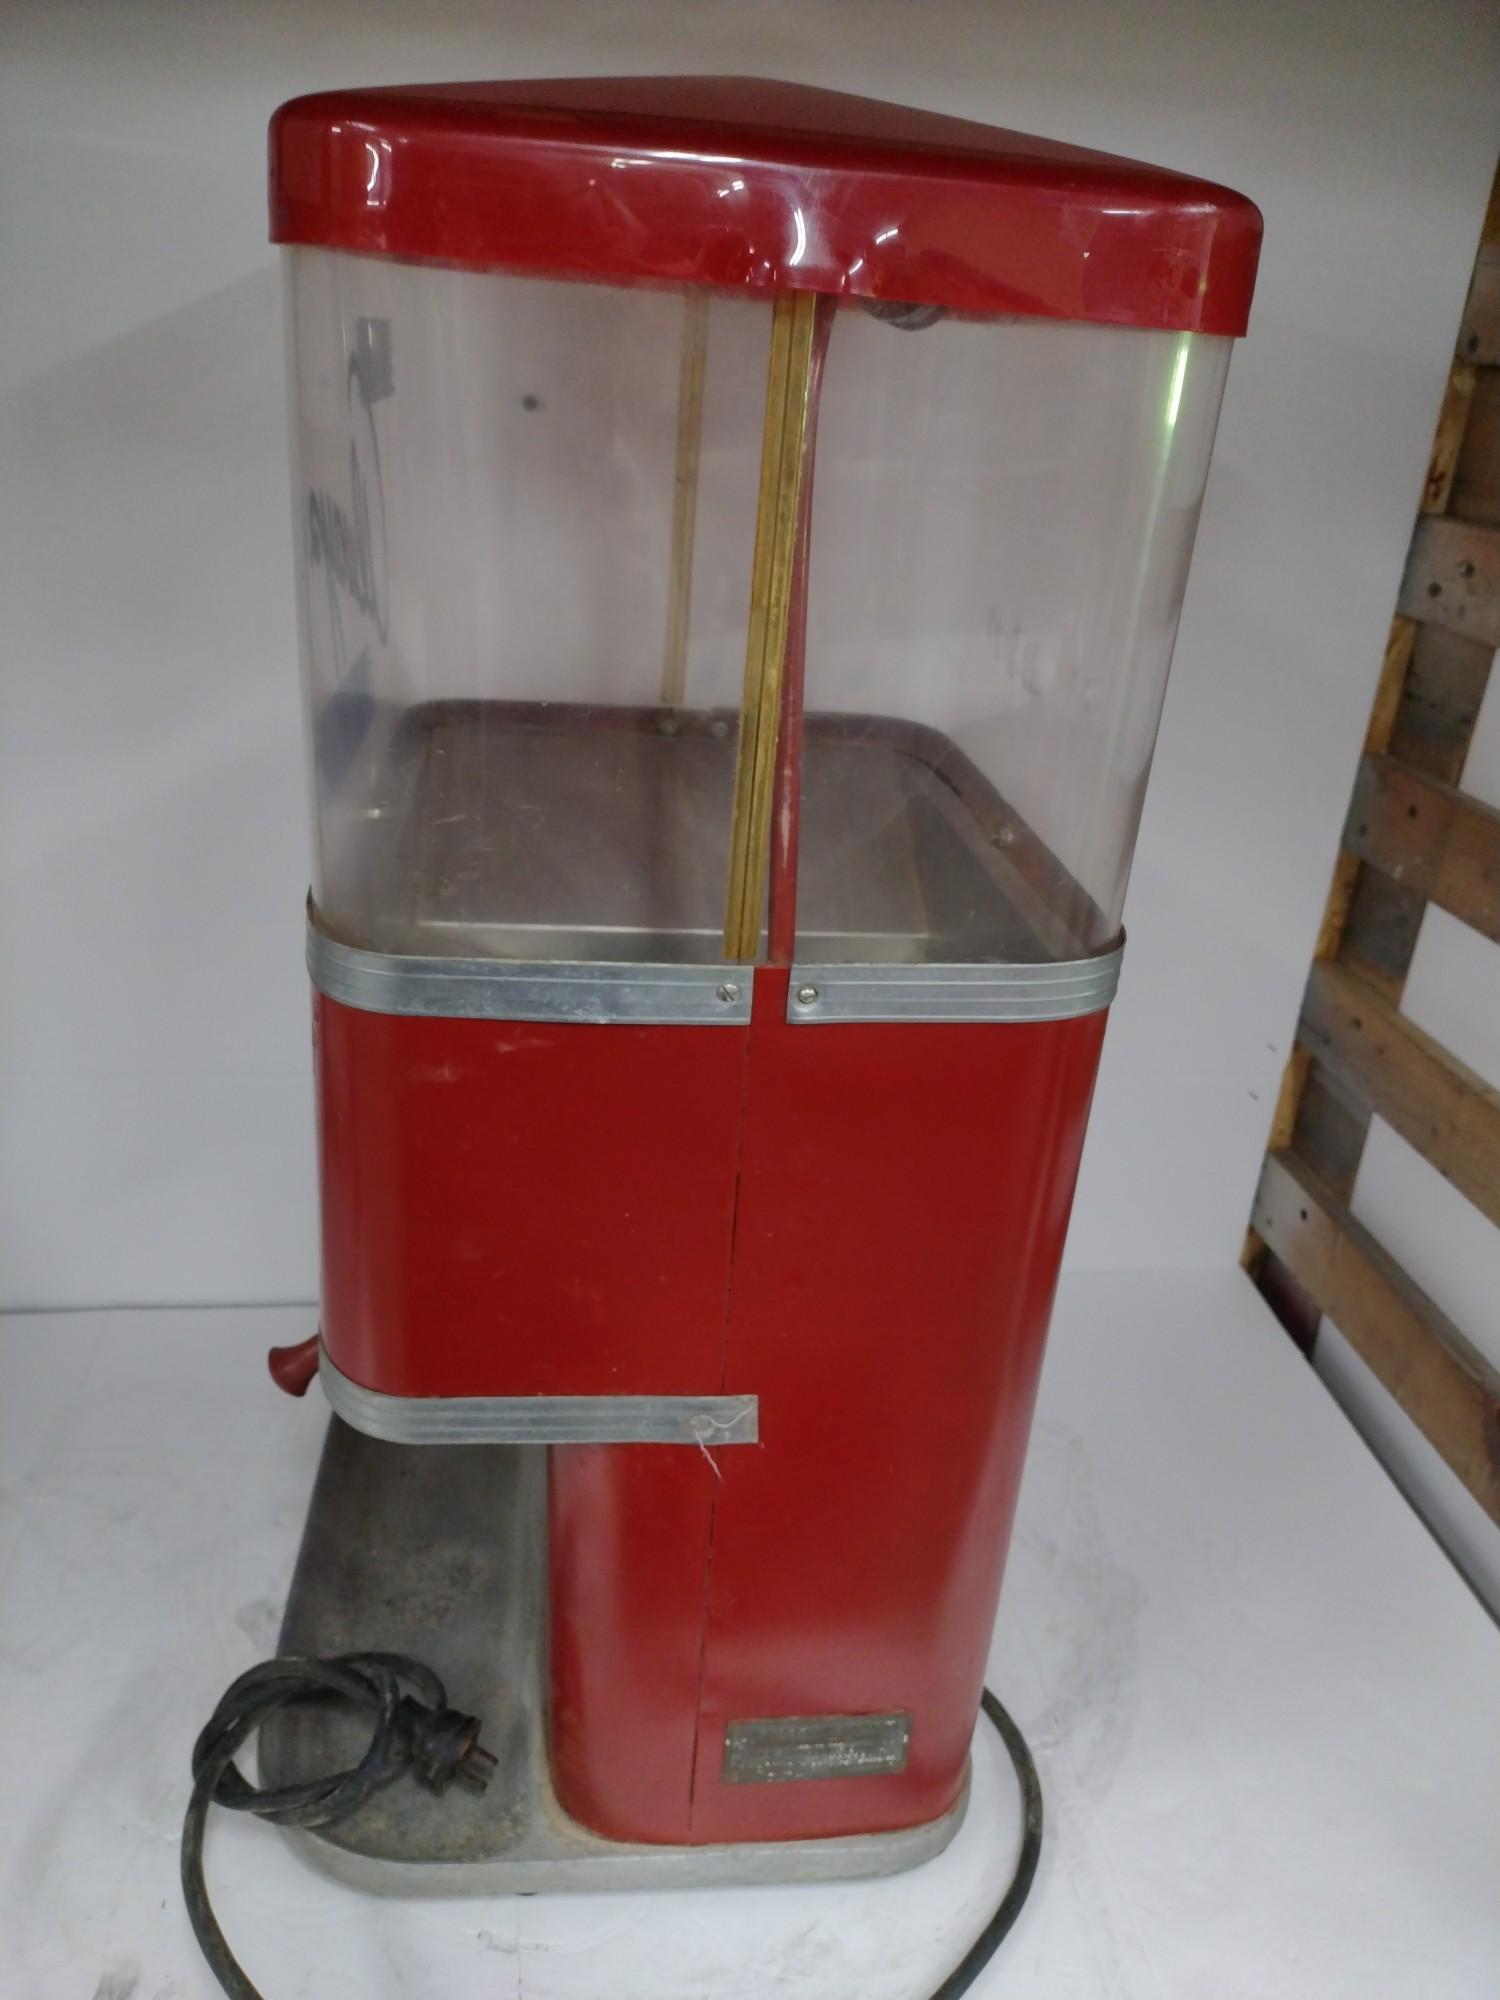 The Little Giant Dispenser Popcorn Machine